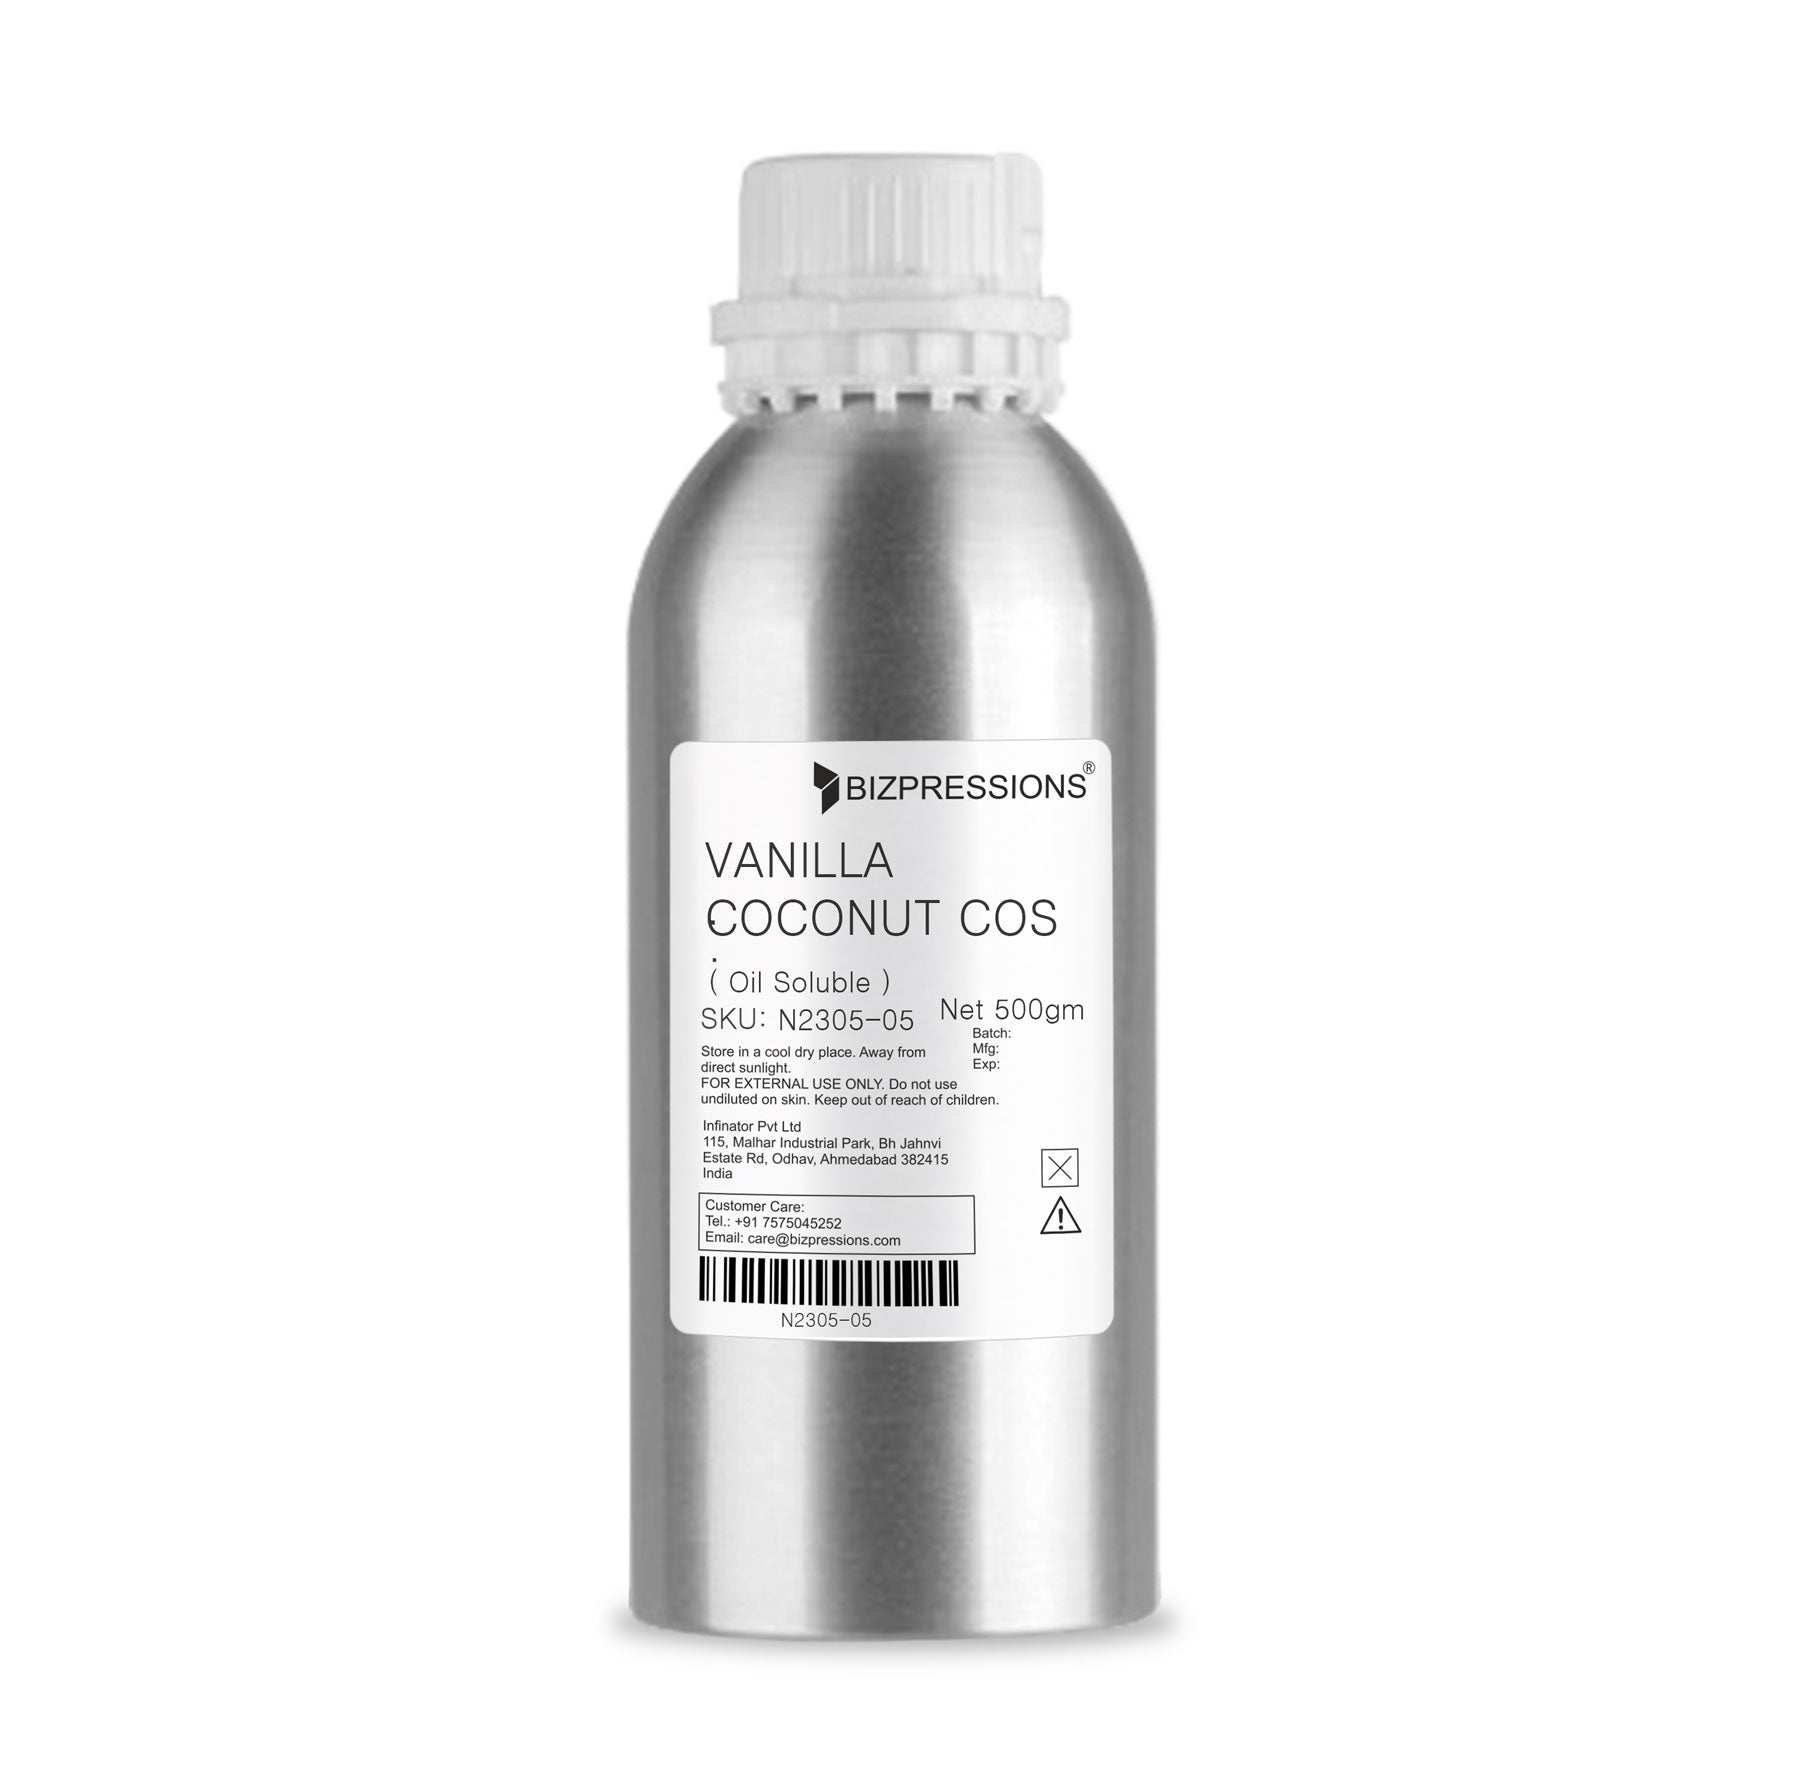 VANILLA COCONUT COS - Fragrance ( Oil Soluble ) 500 gm